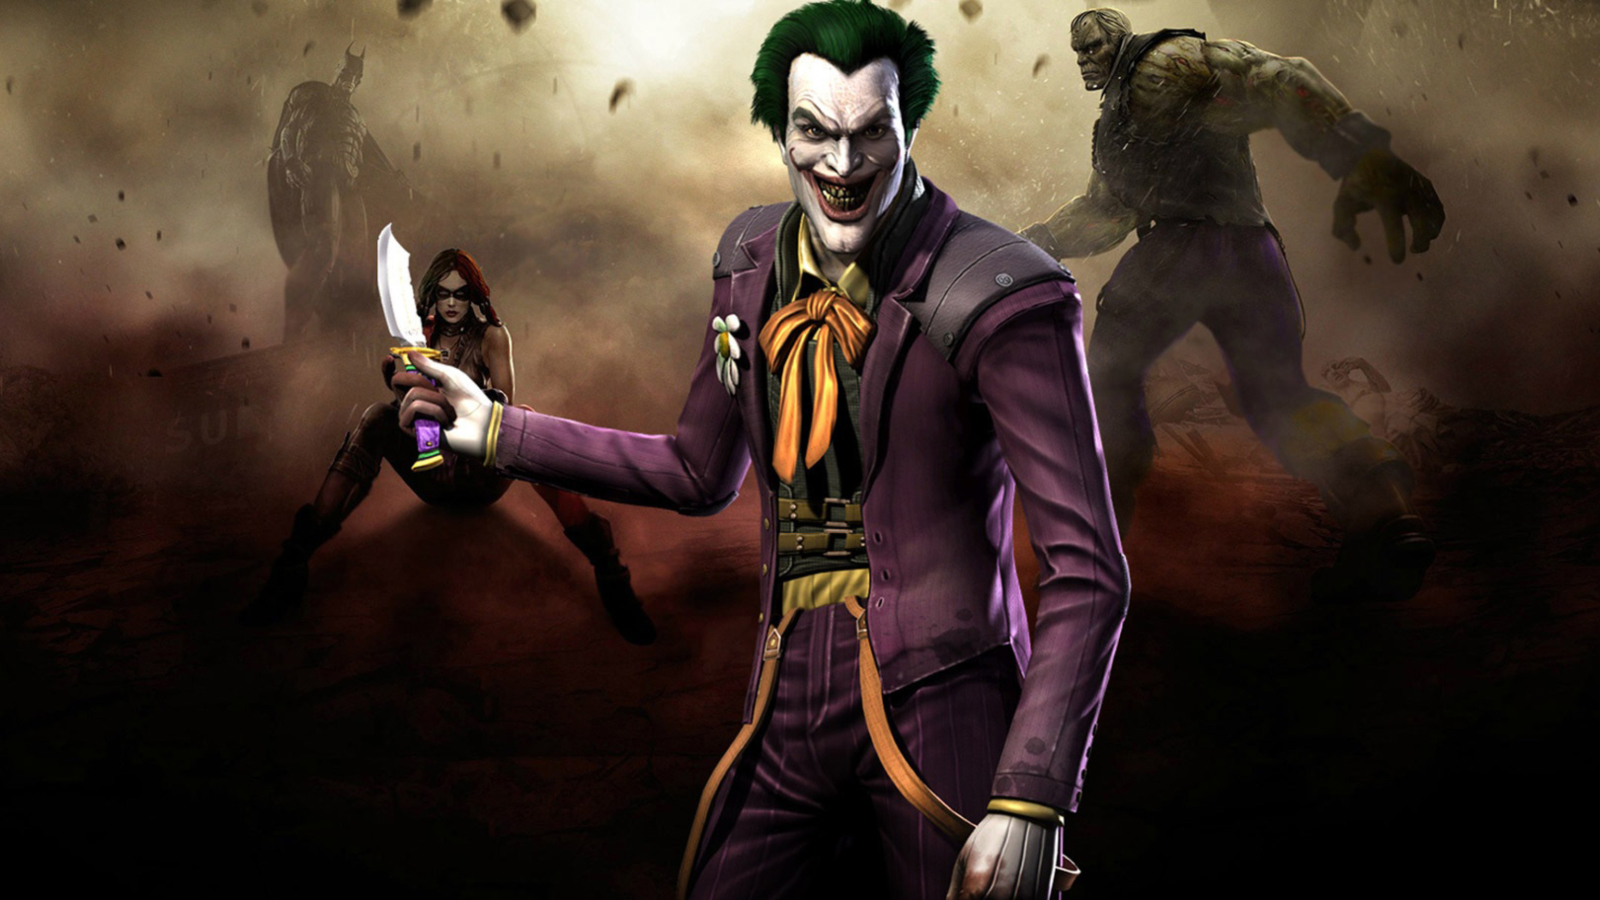 Injustice Gods Among Us - Joker Wallpaper for Widescreen Desktop PC 1600x900